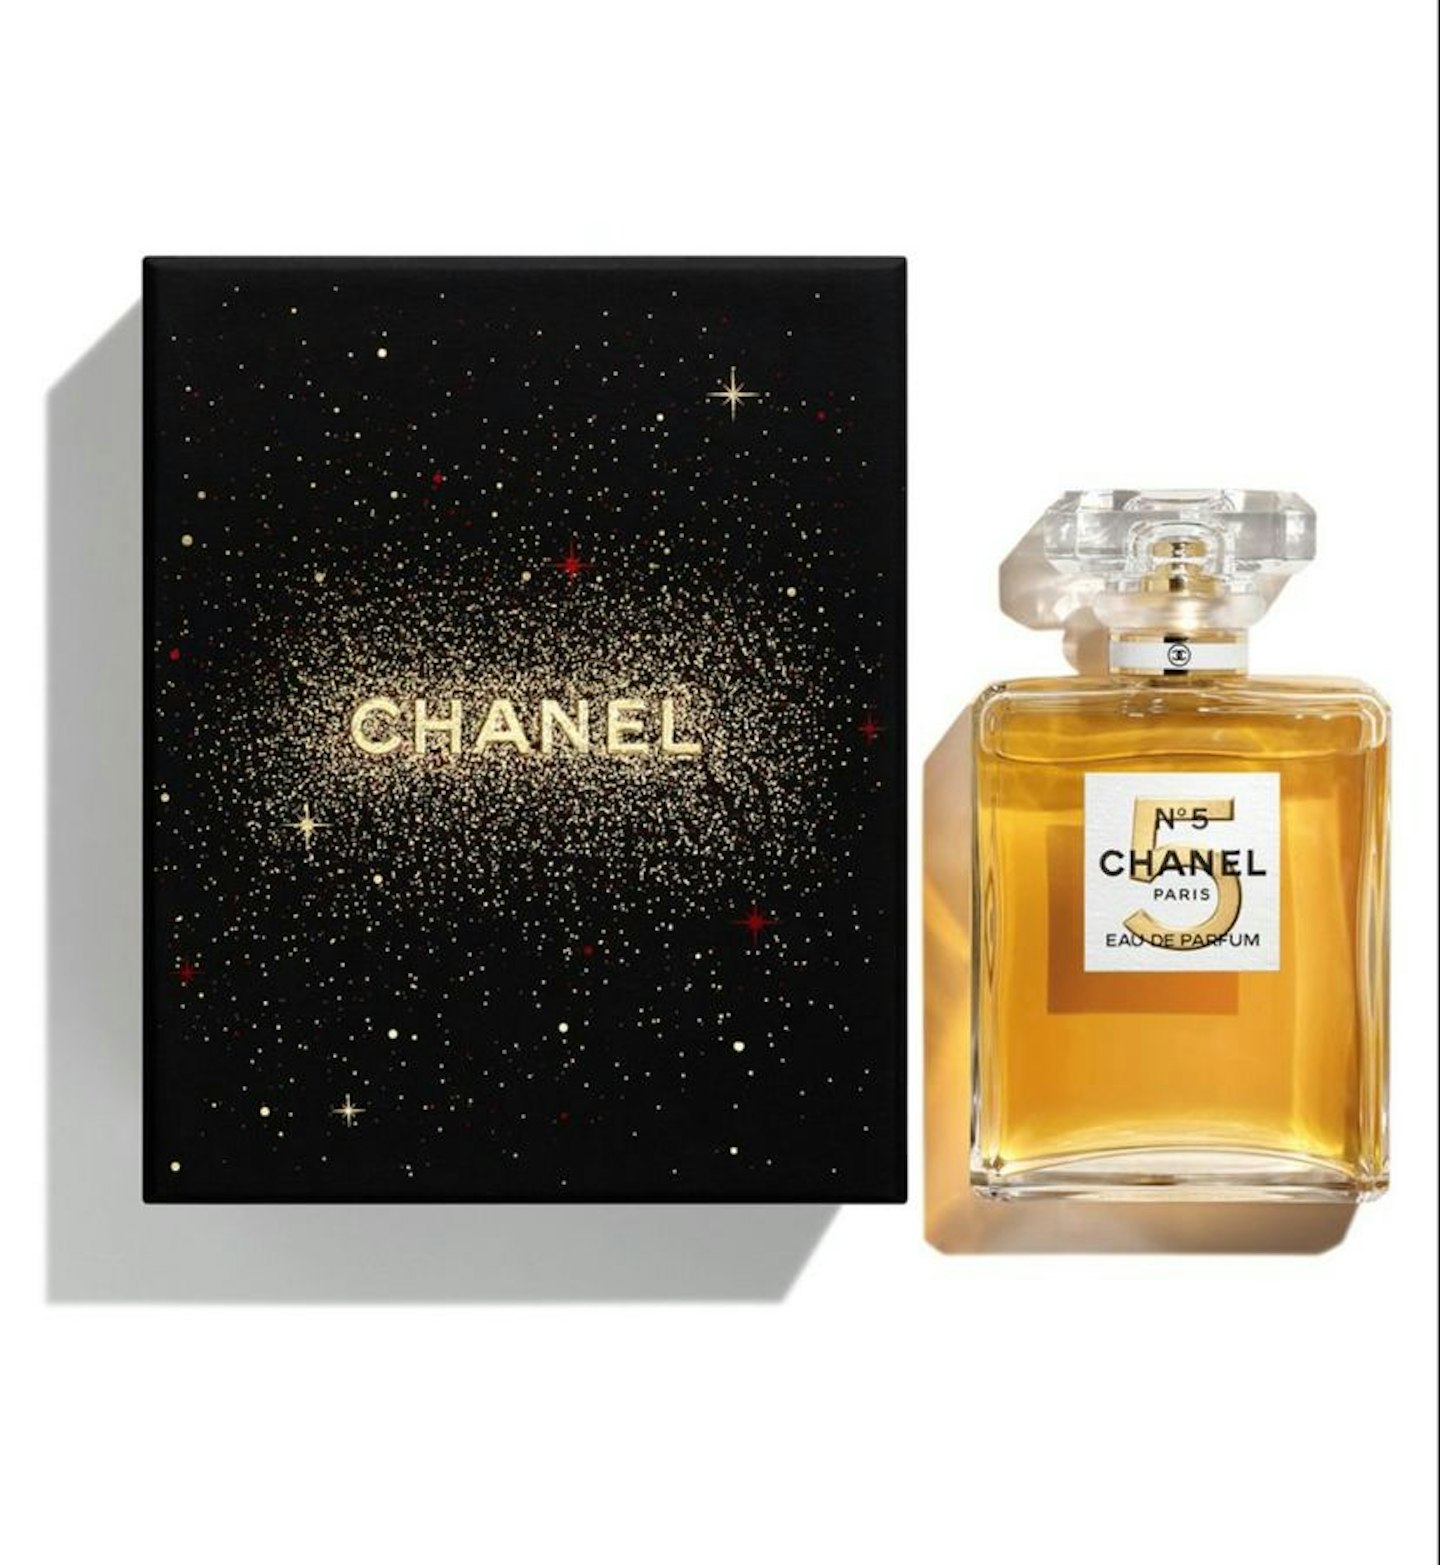 Tuesday – Chanel, No5 Limited Edition Eau de Parfum Gift Box, £130